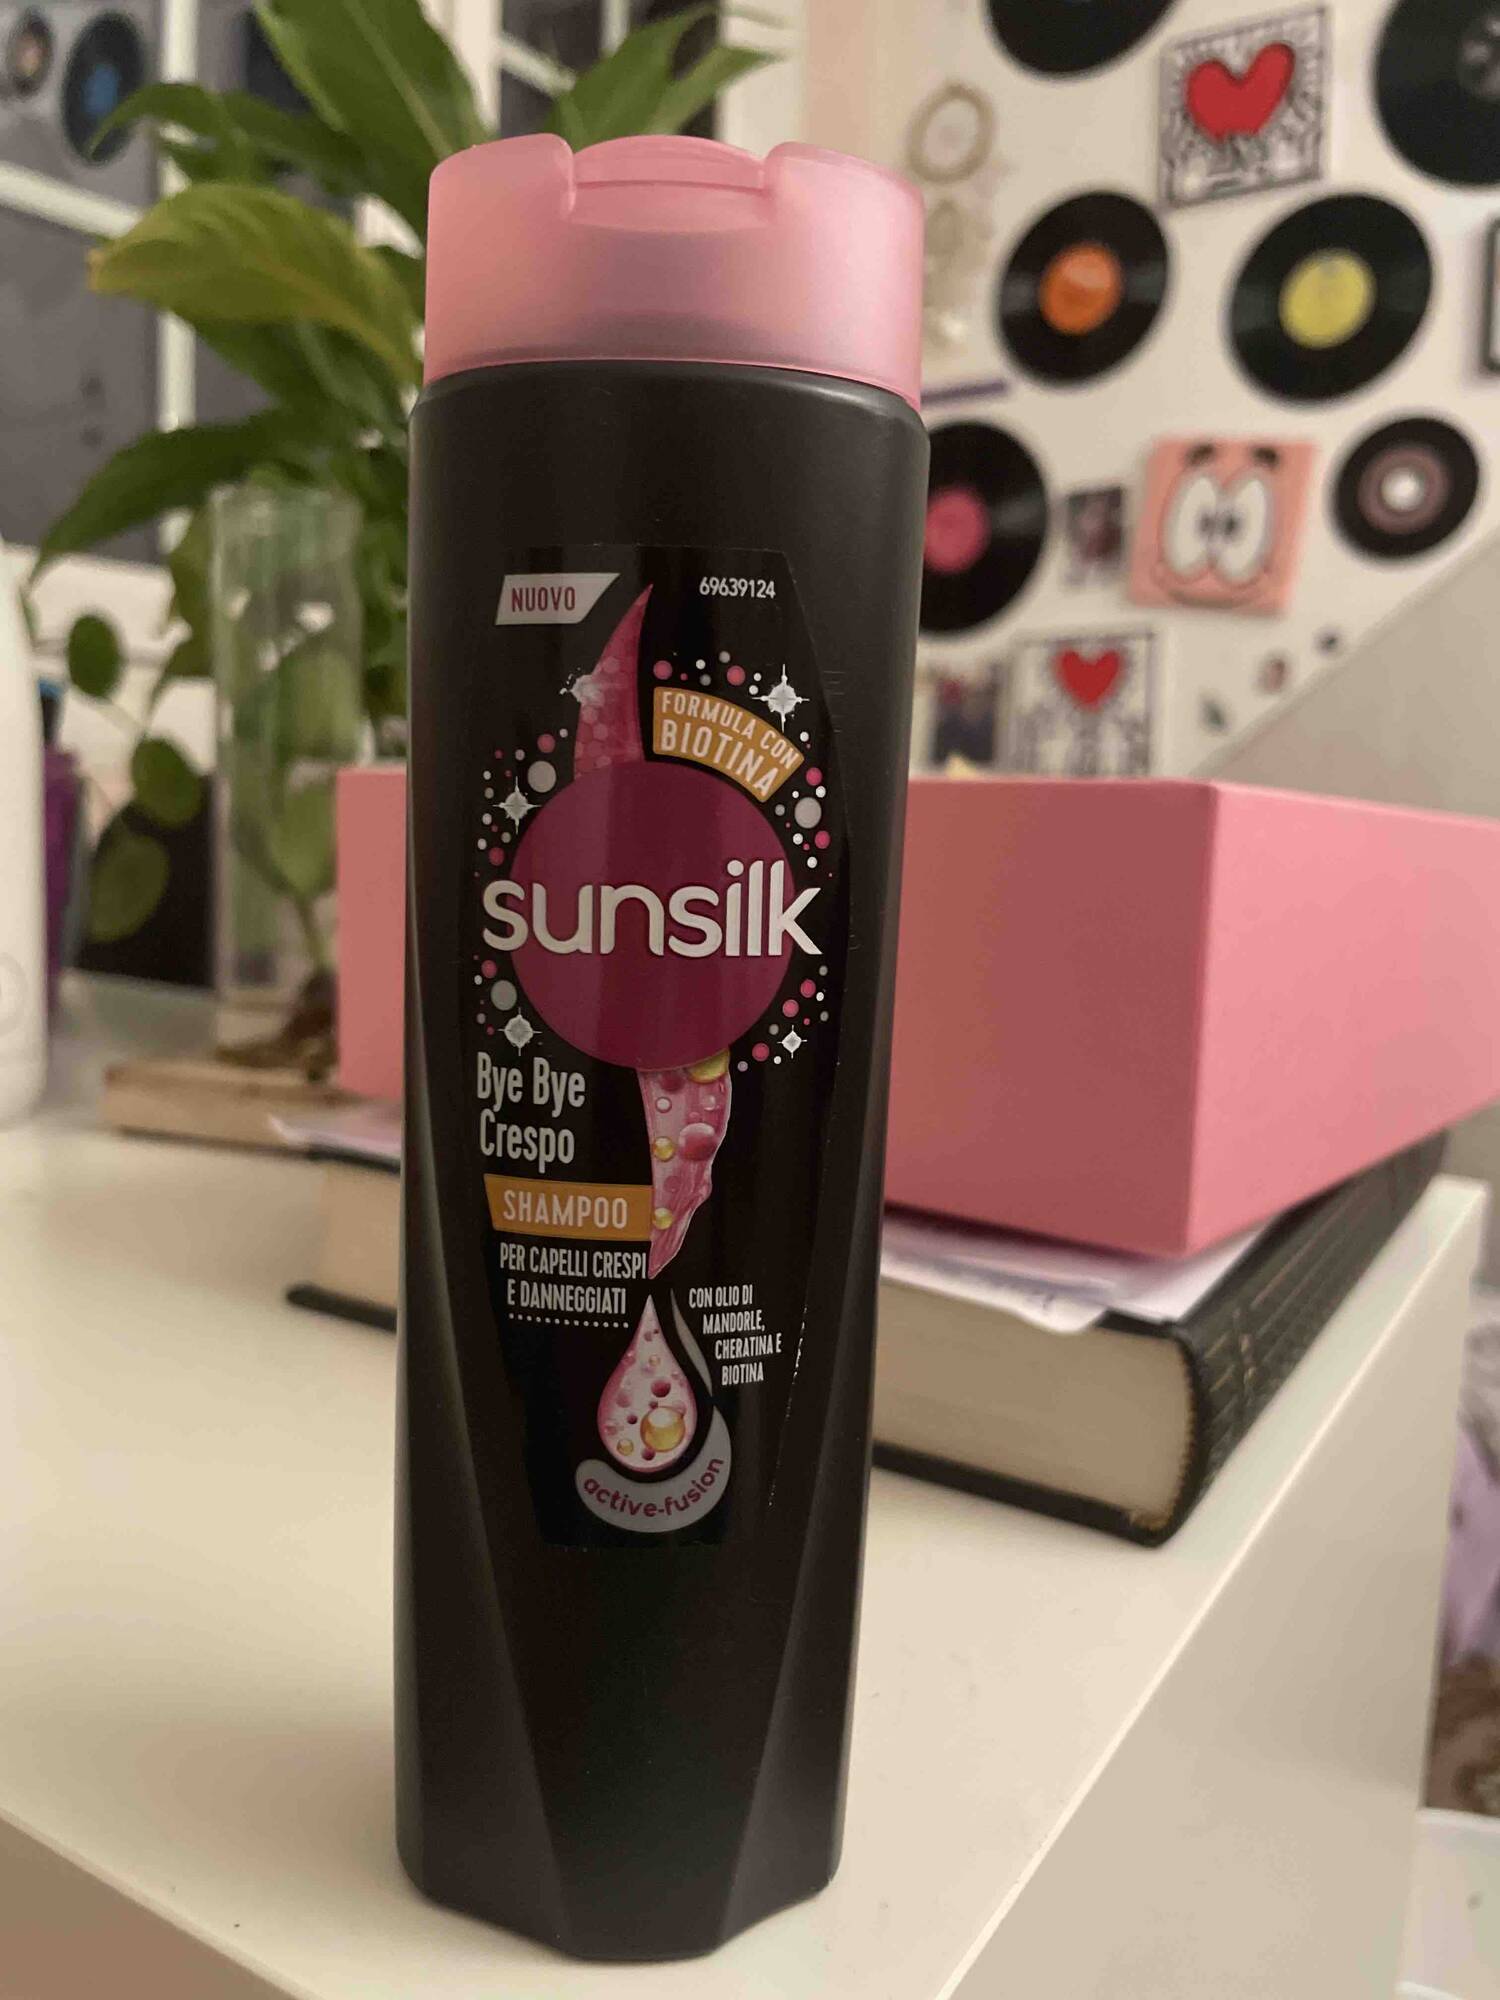 SUNSILK - Bye bye crespo shampoo